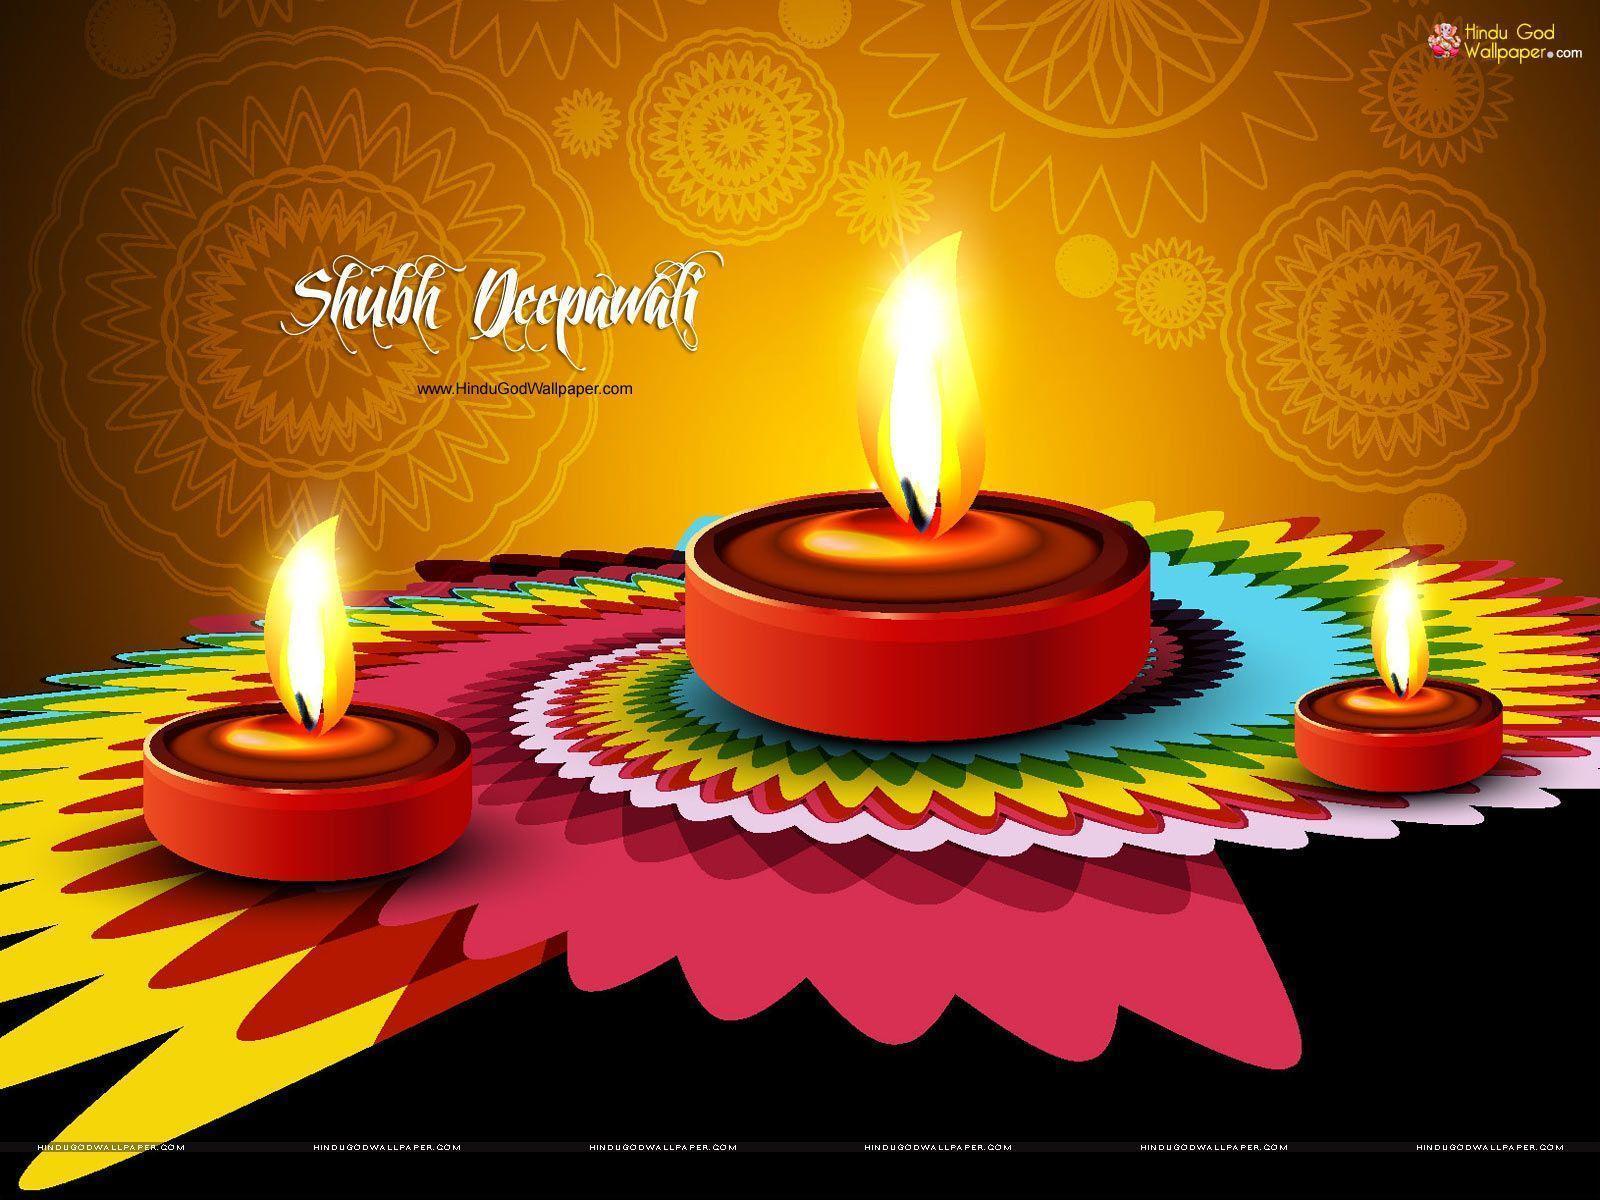 Diwali Wallpapers - Happy Diwali Images 2019 Download - HD Wallpaper 